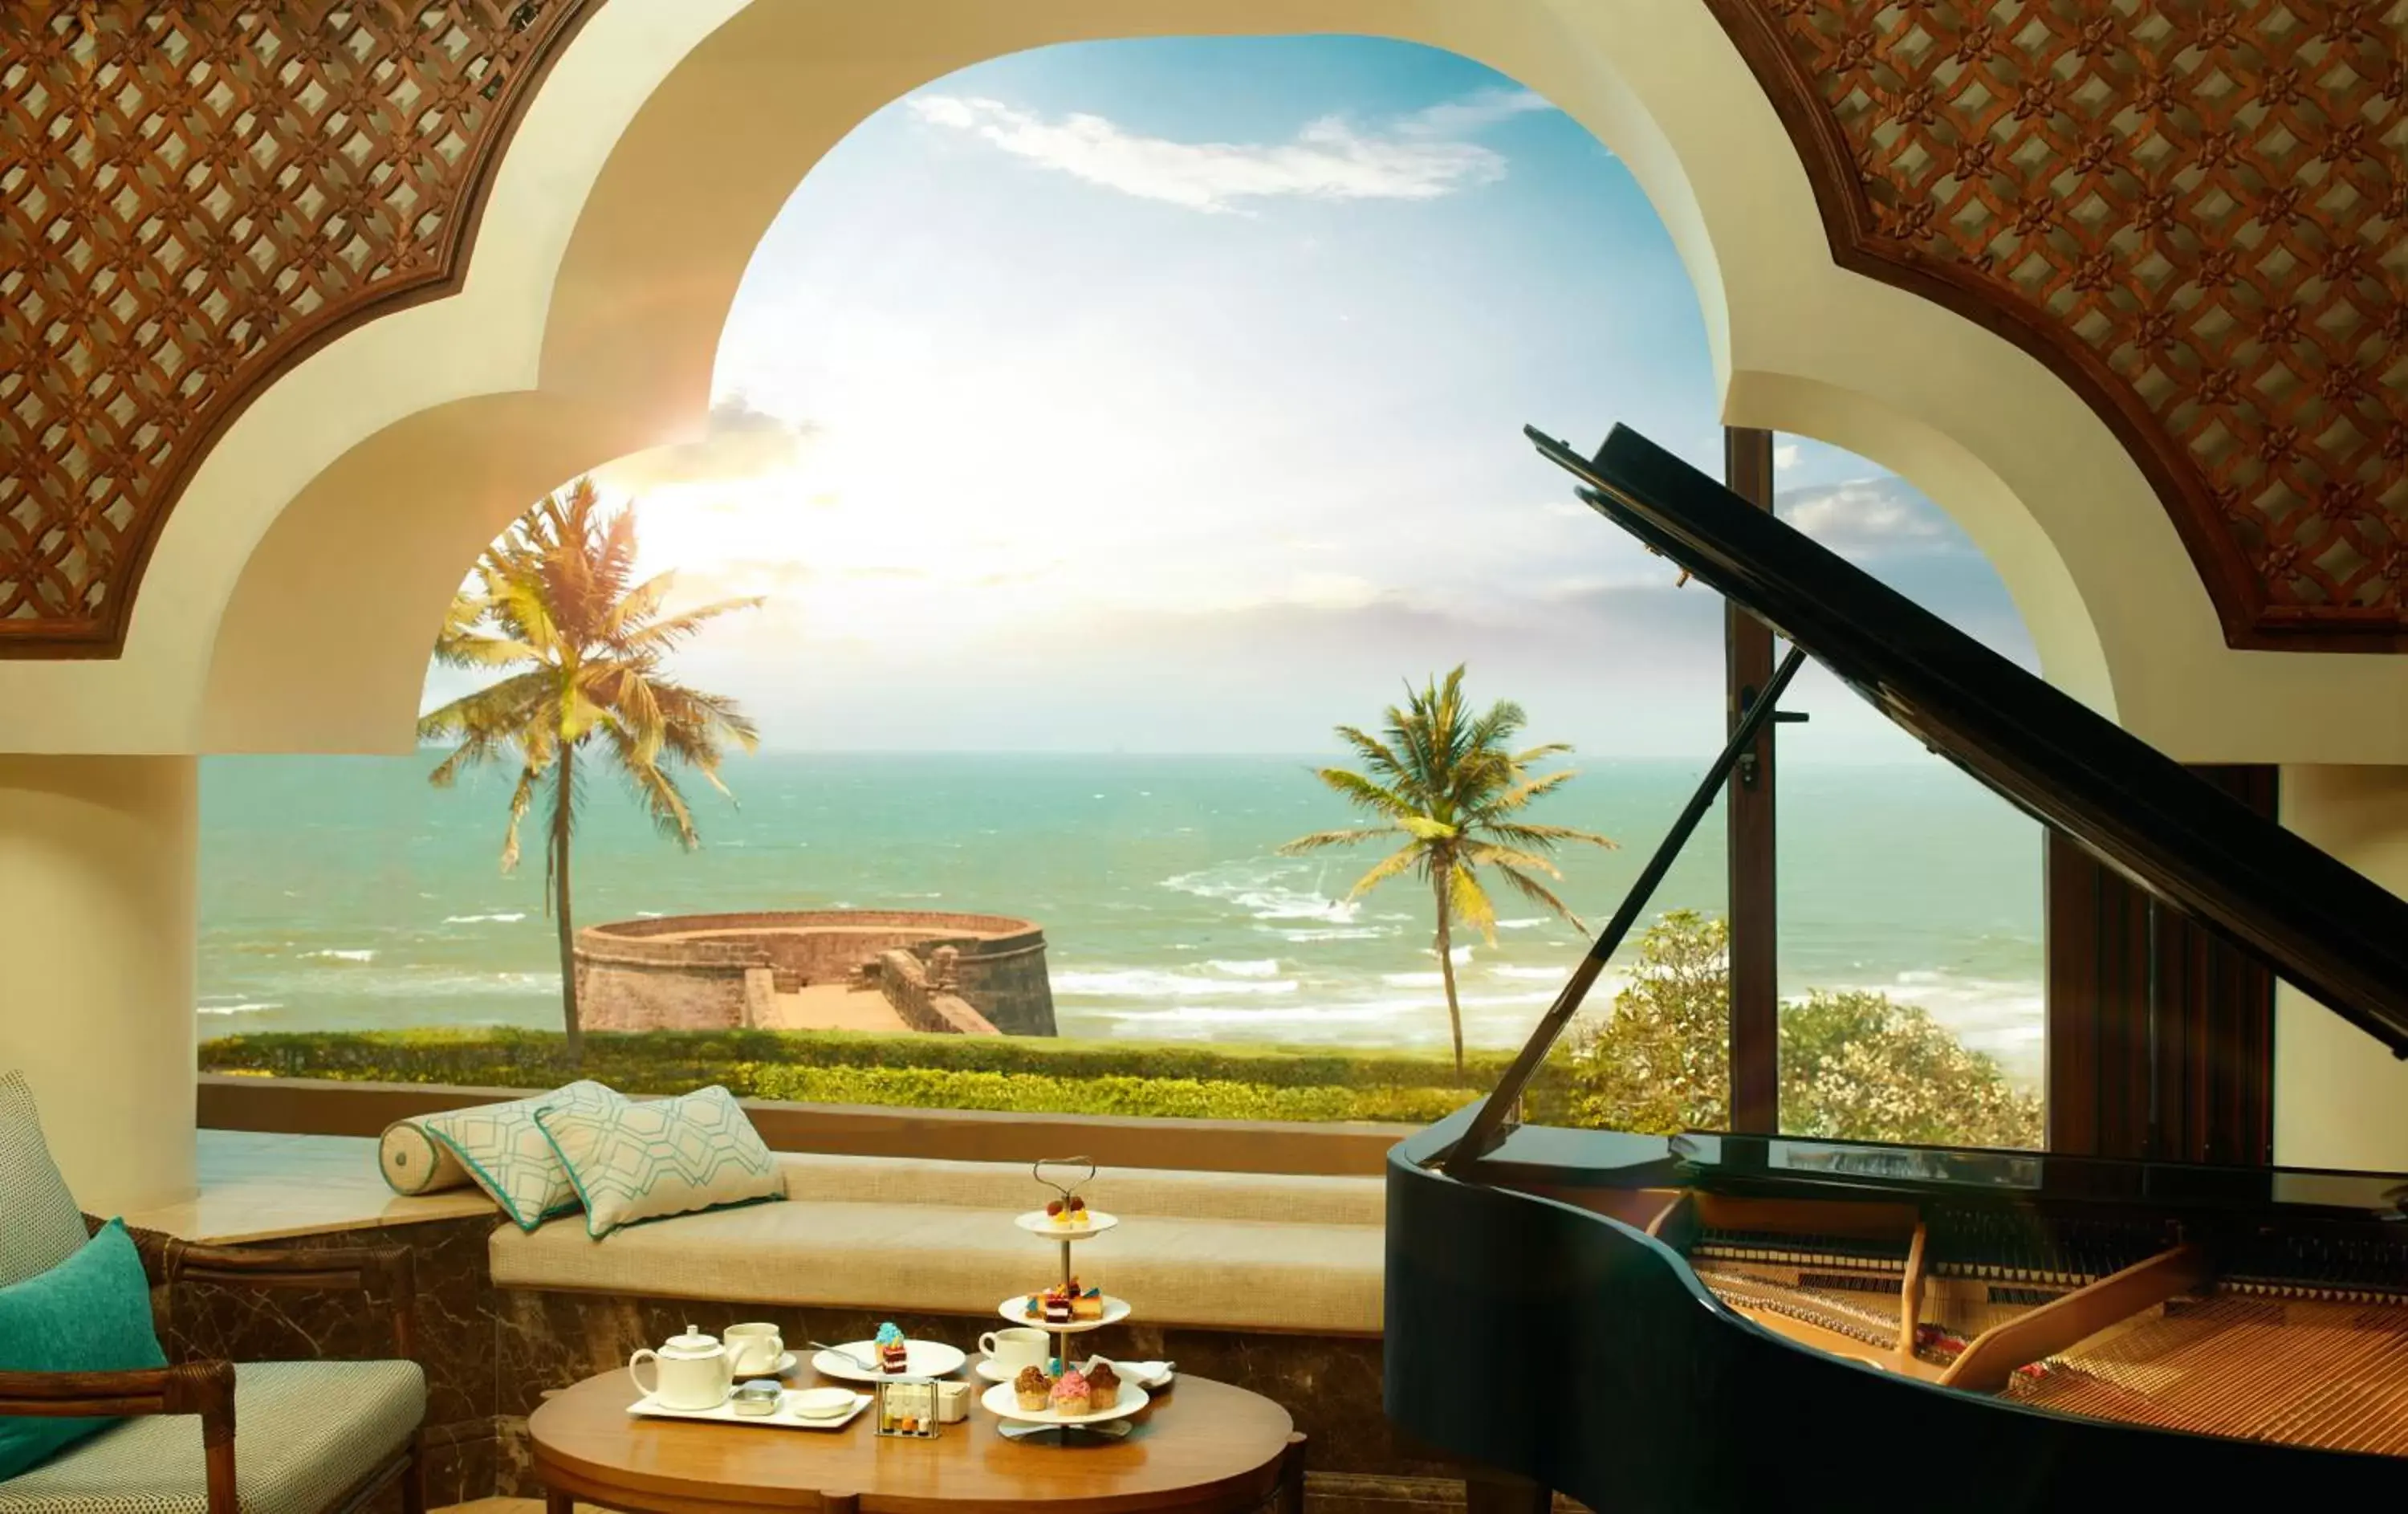 Lobby or reception in Taj Fort Aguada Resort & Spa, Goa